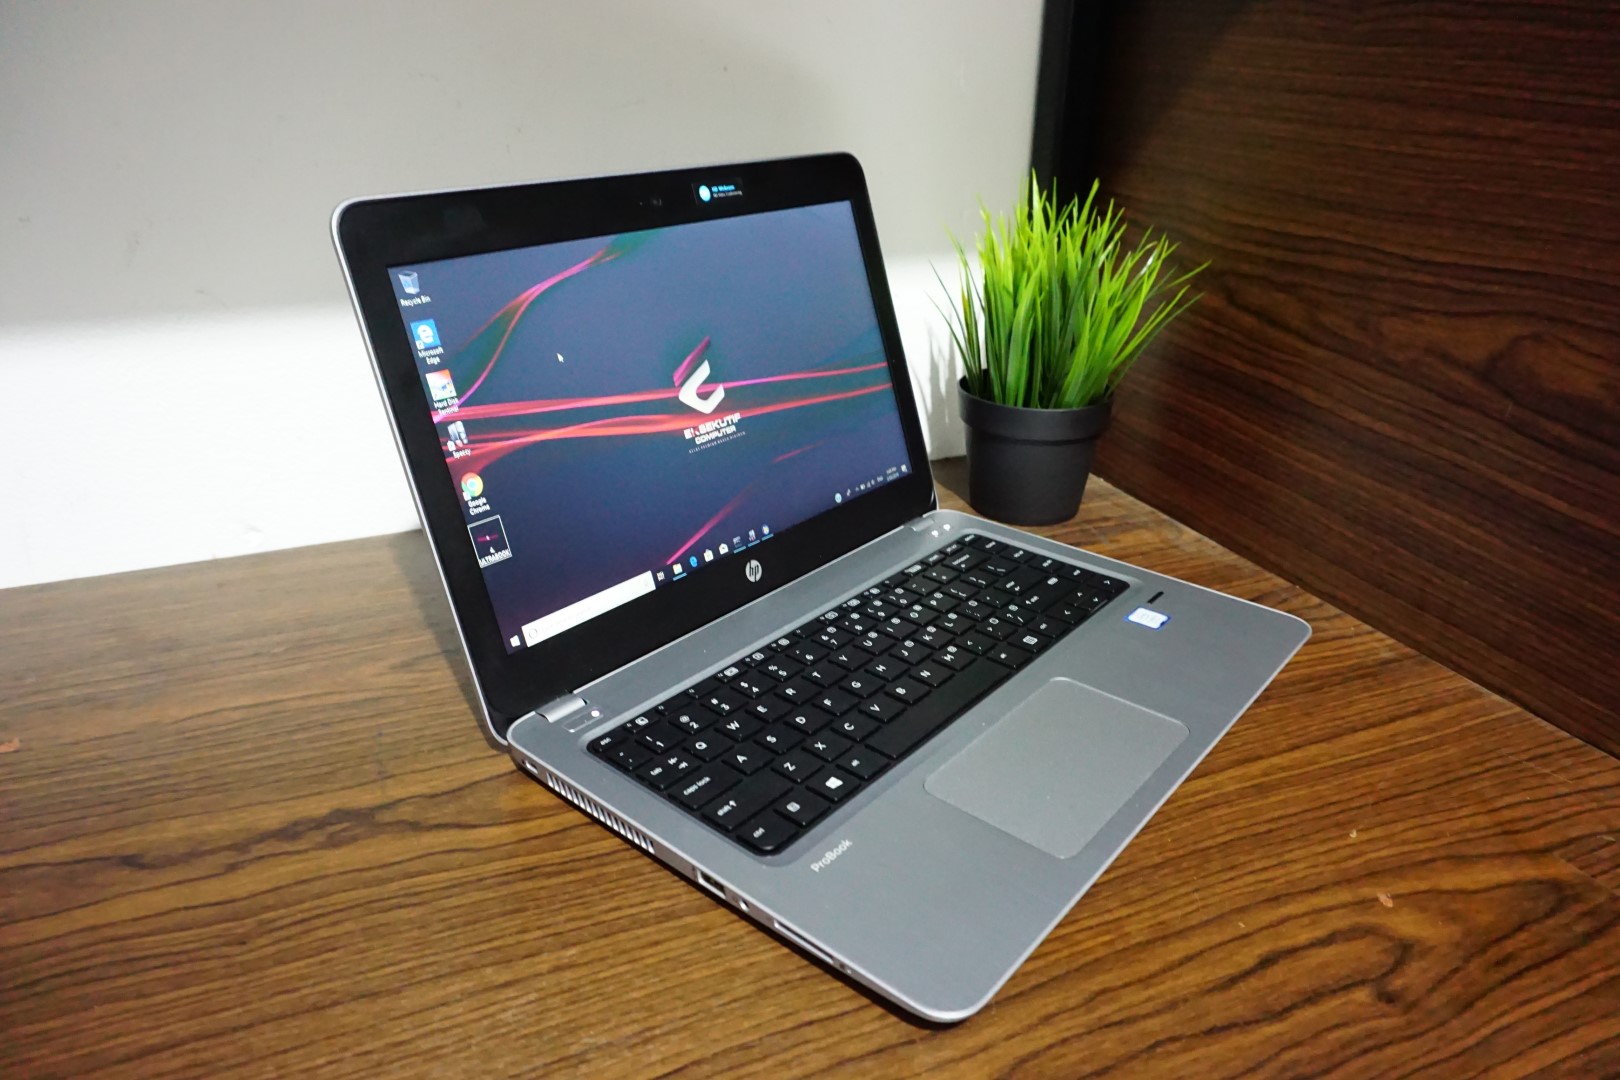 Jual Laptop HP Probook 430 G4 Core i5